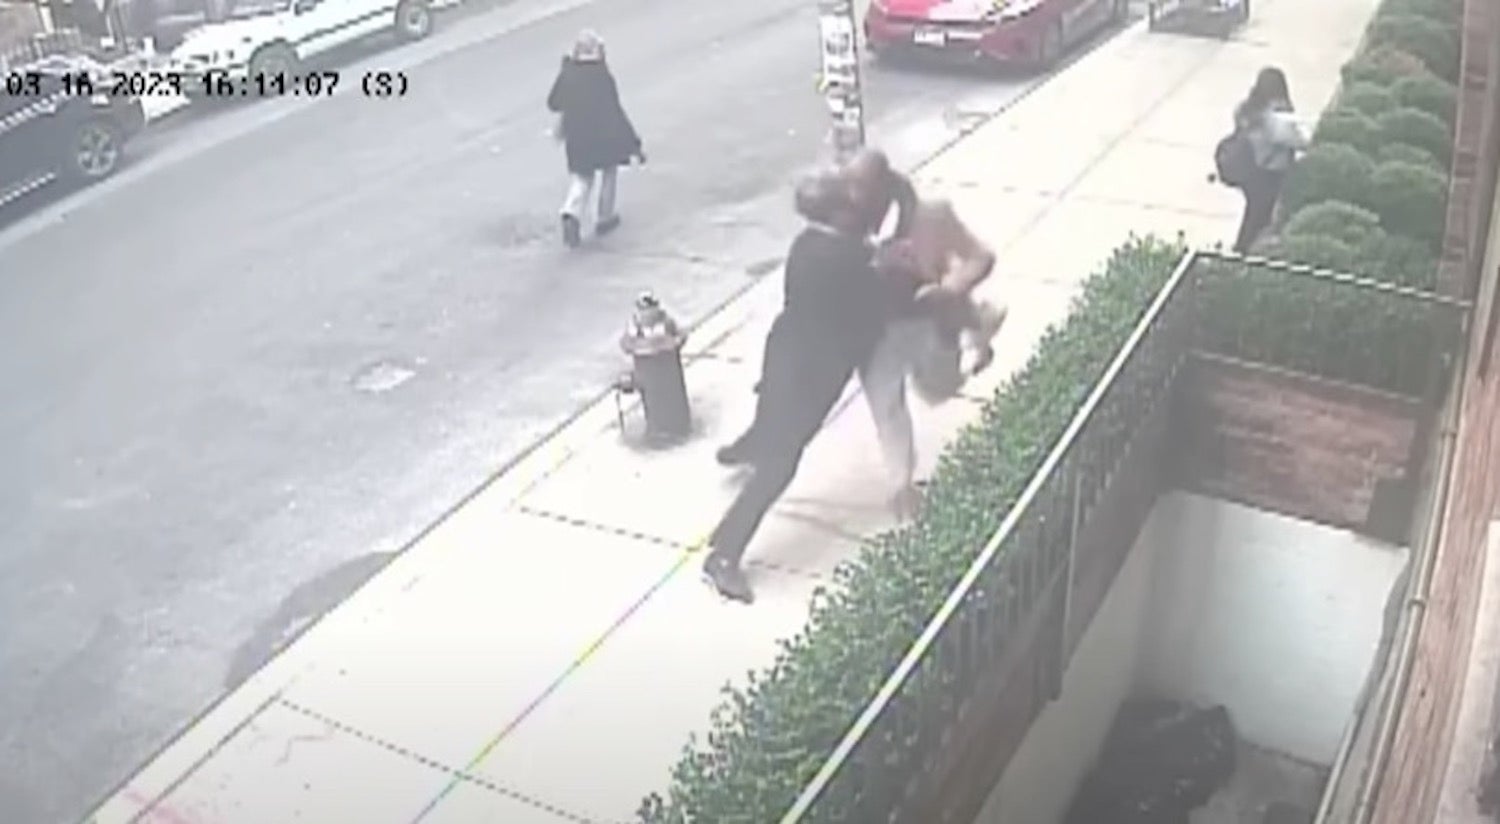 Wild Footage Shows Brave Good Samaritan Purportedly Tackling Thwarting Gun Wielding Man Fleeing